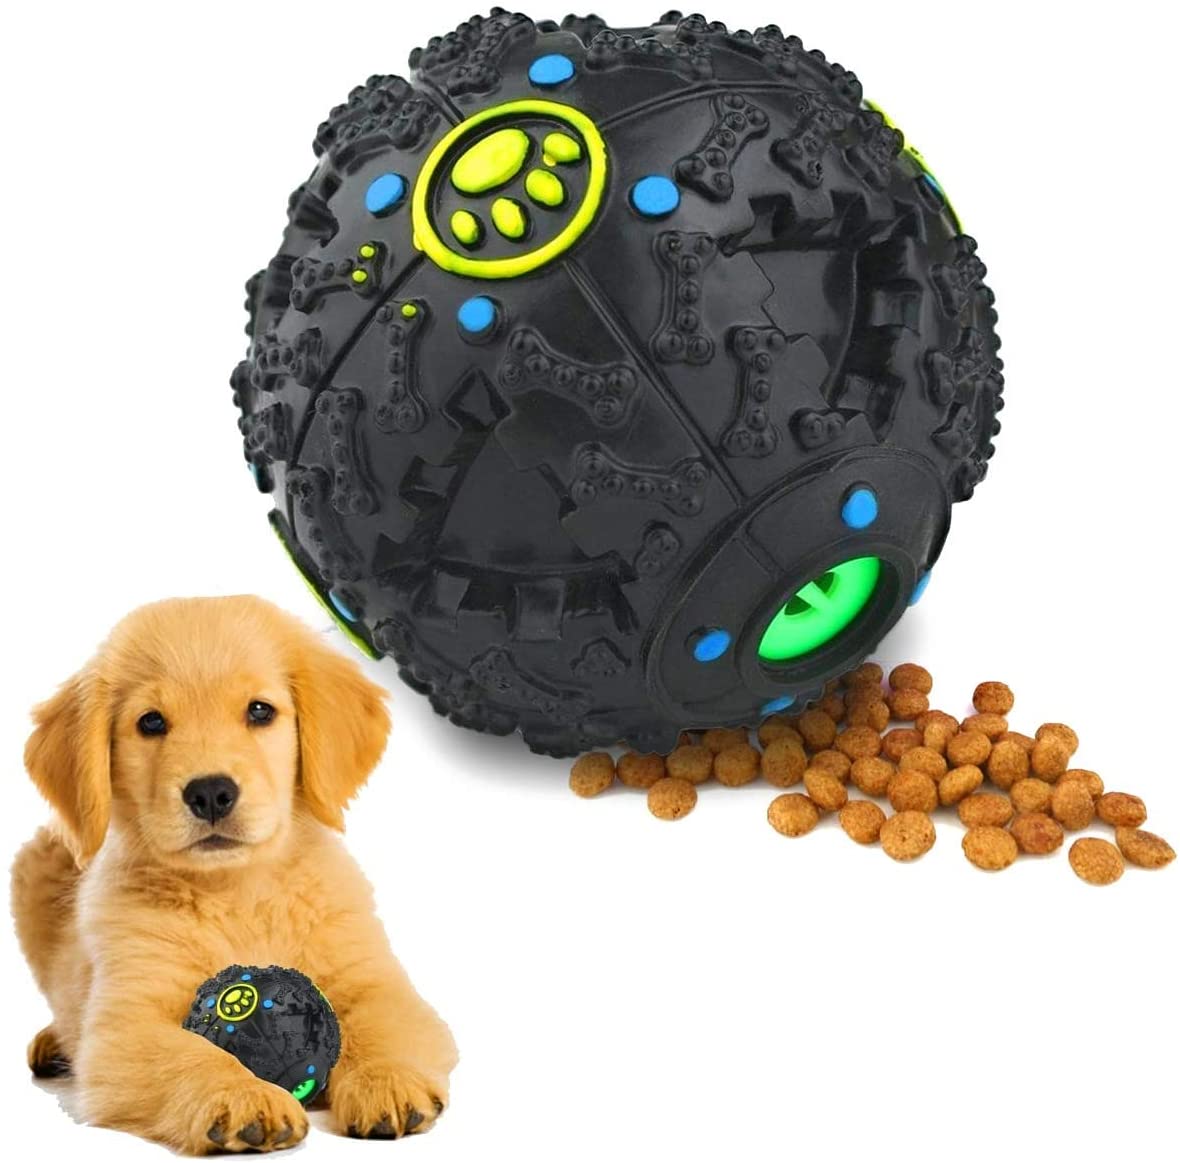  WXJHA Alimentador de Bolas de Juguete para Perros, Alimentador Lento Juguete Iq para Mascotas, Juguete Actividad interactiva dispensación Alimentos Pelotas Mascotas Mascotas 